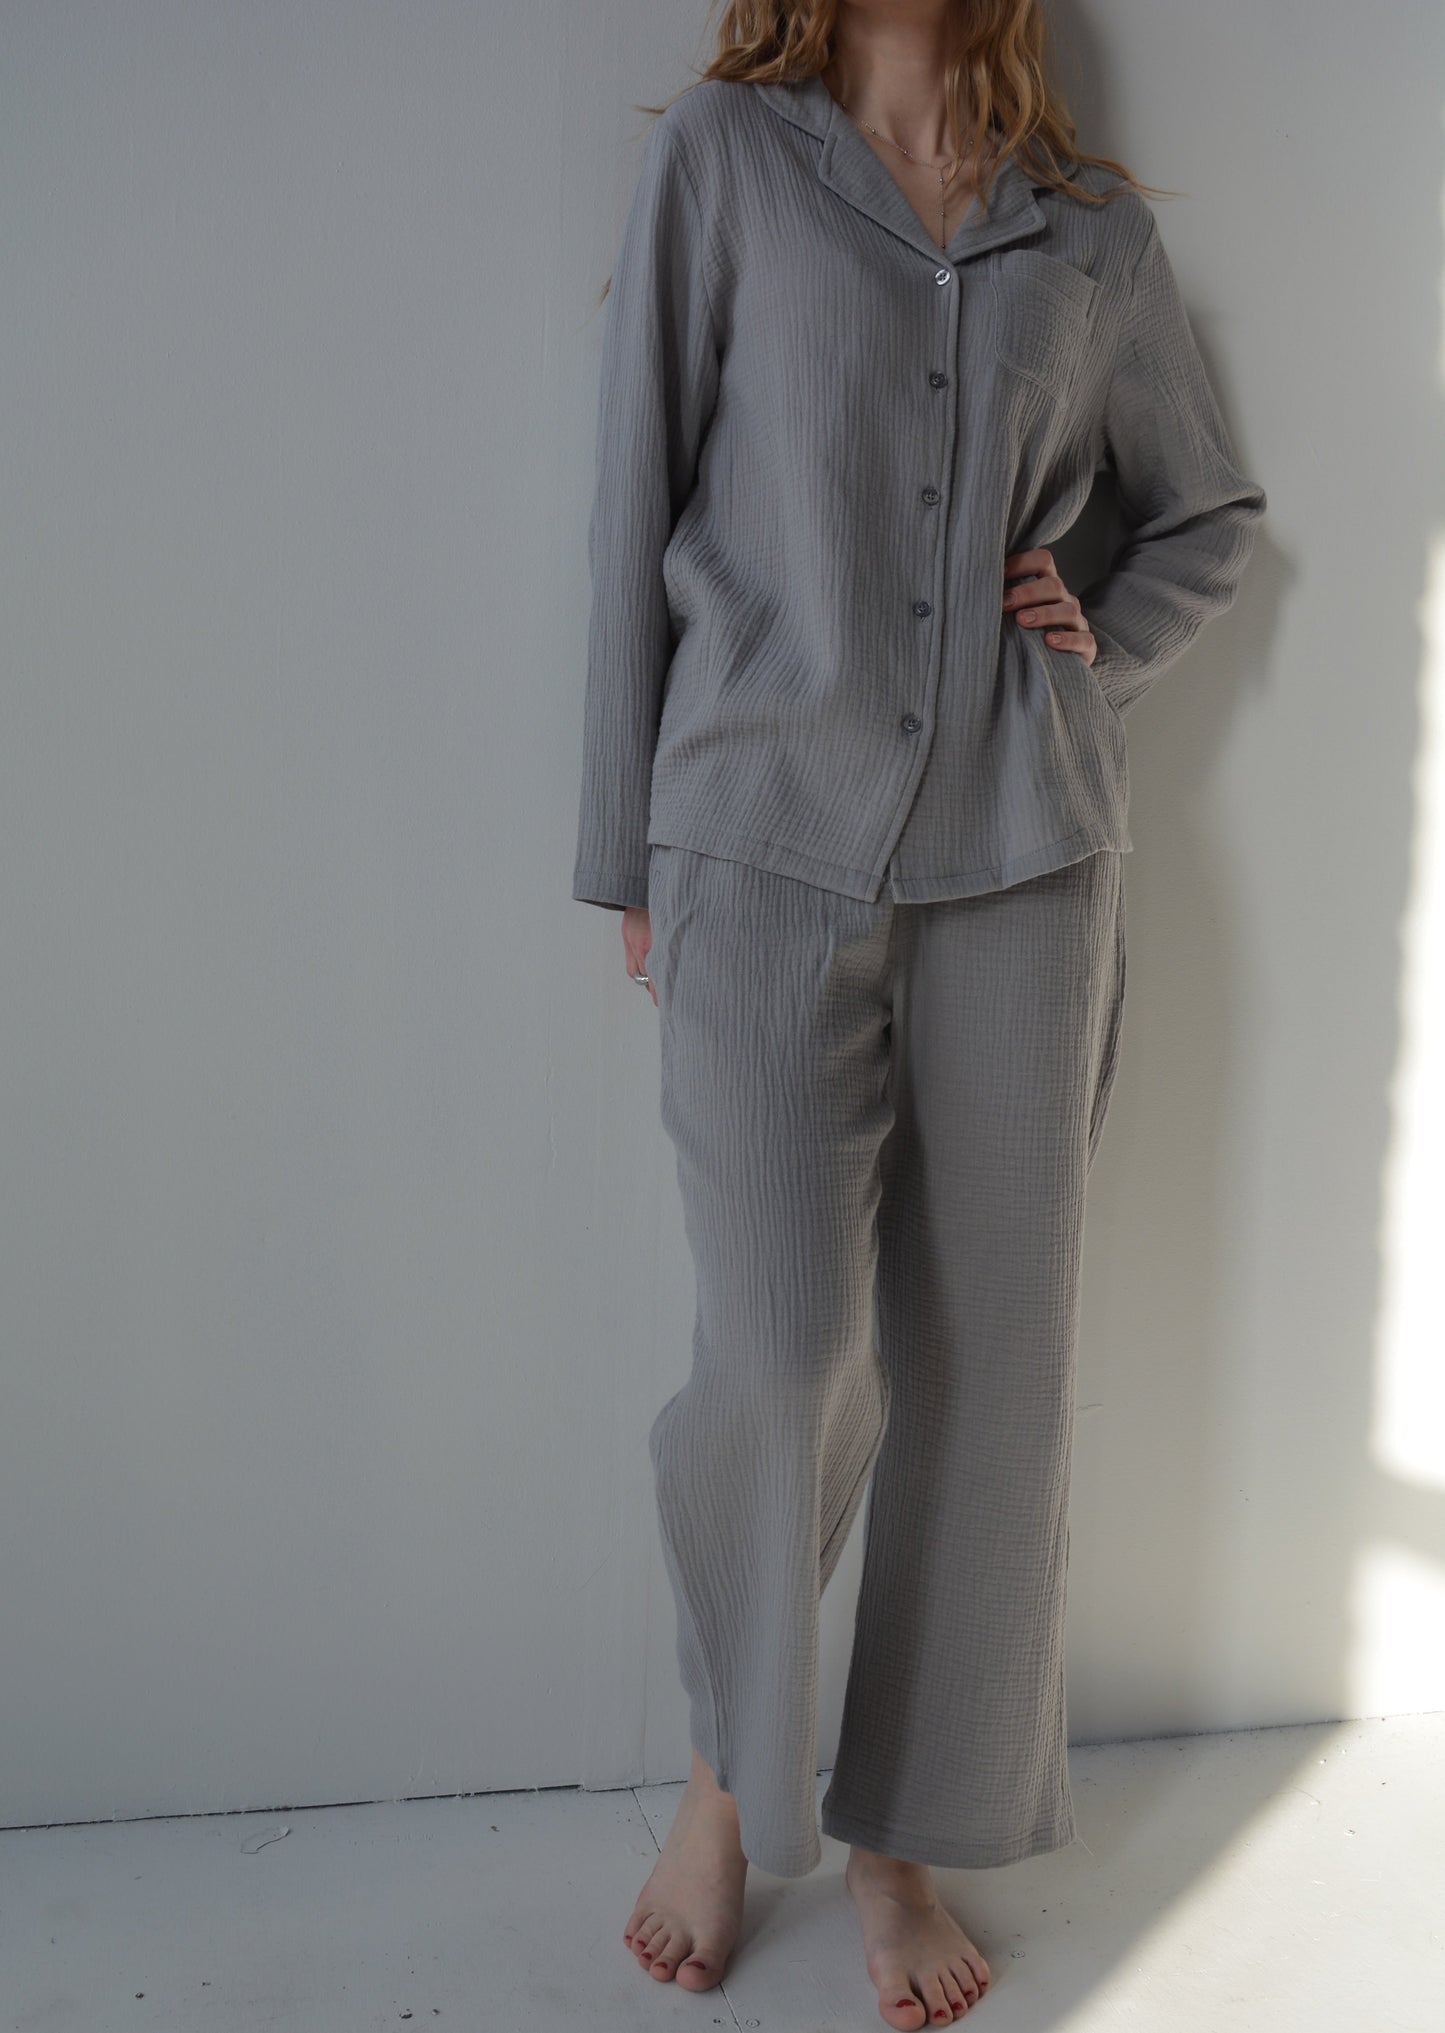 Cotton Muslin double gauze Sleepwear Set pajama set in grey color